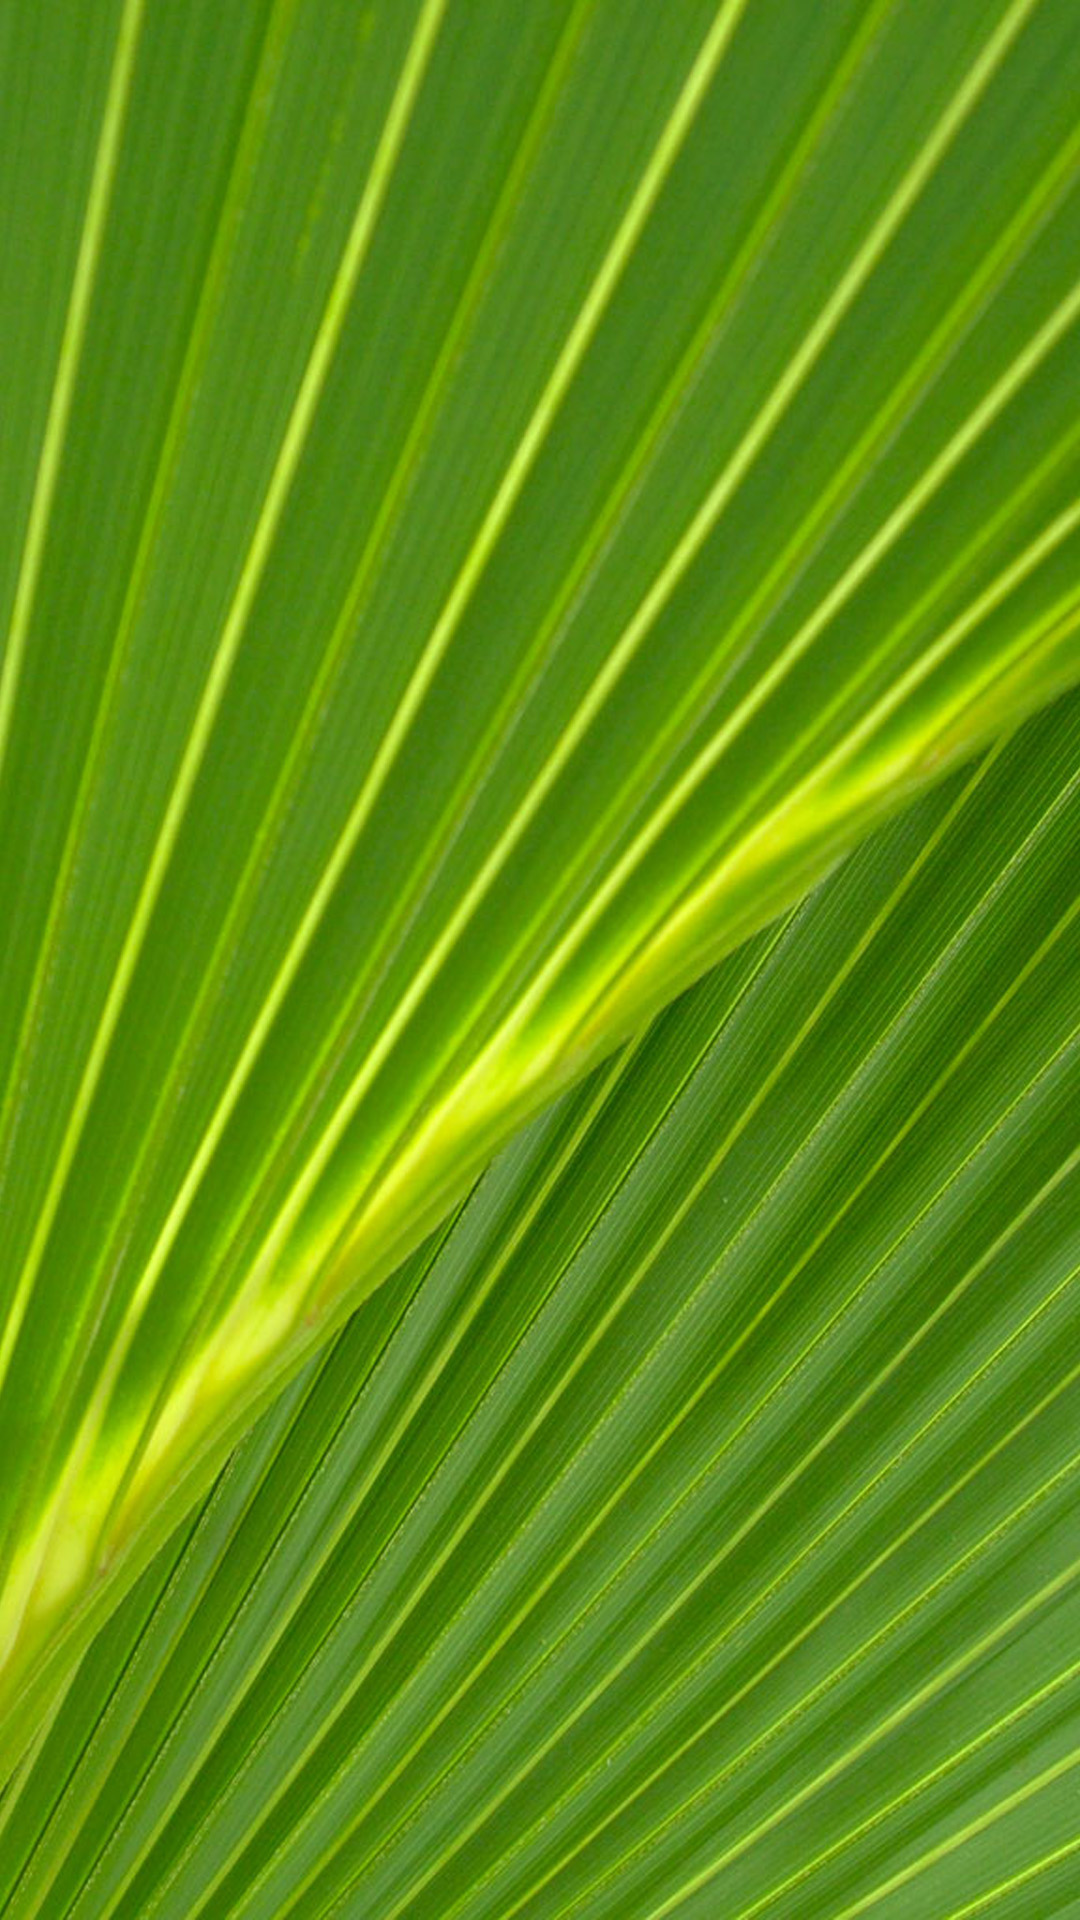 Palm Leaves Samsung Galaxy S5 Wallpaper